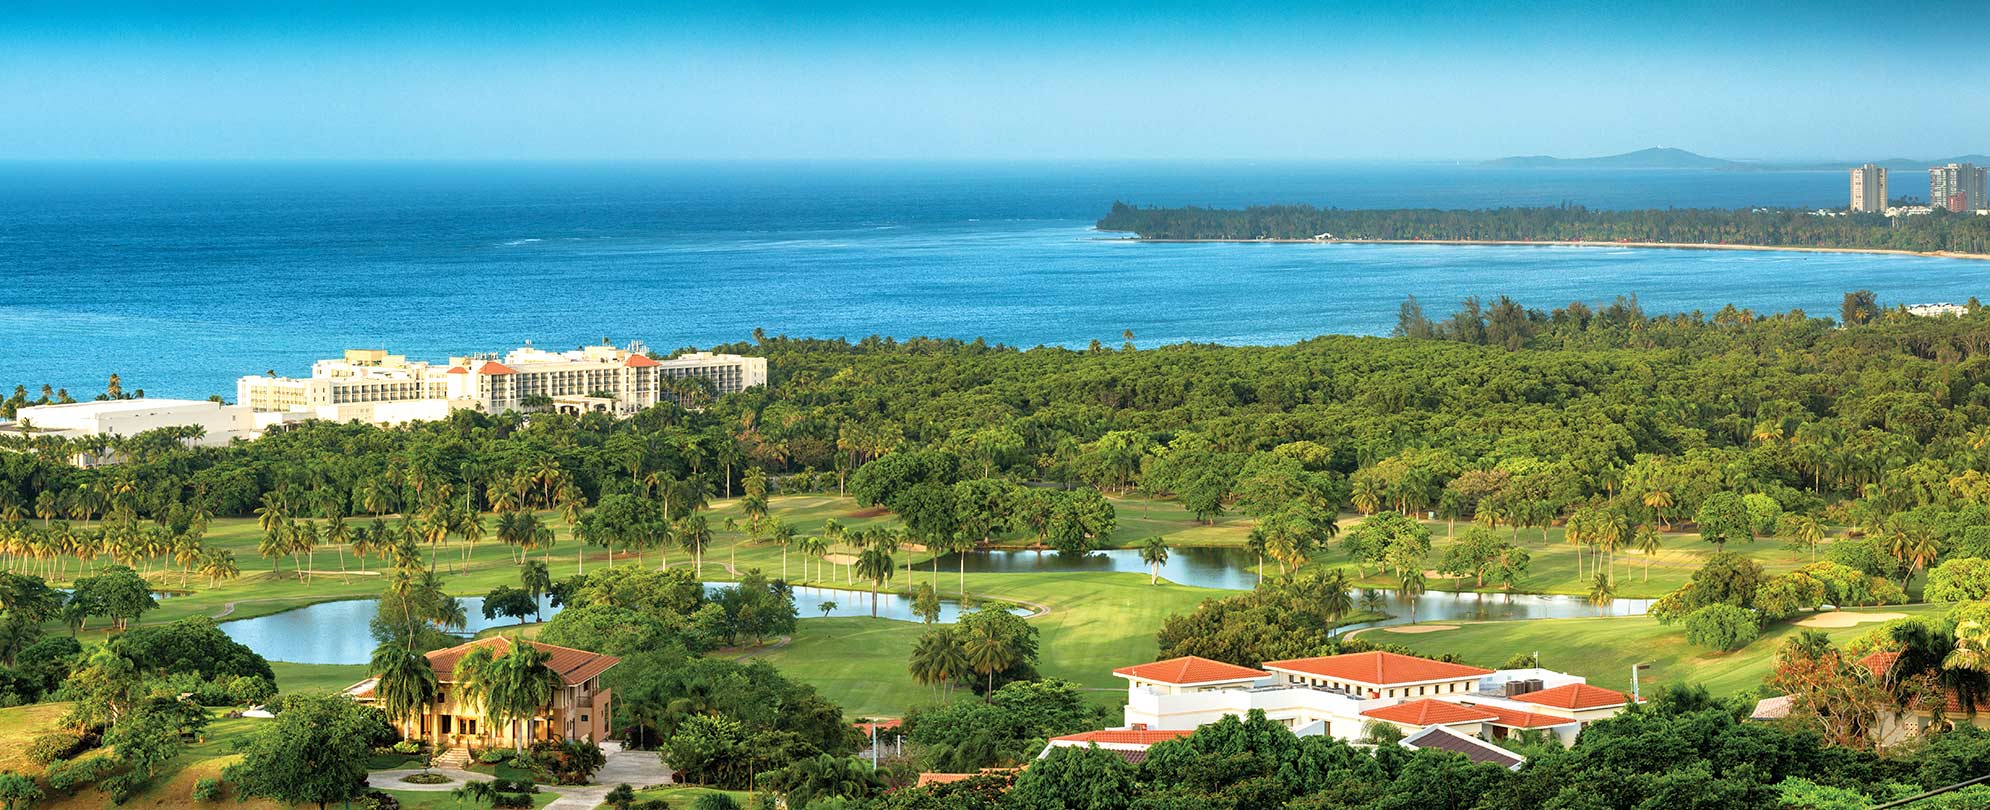 Birds-eye-view of golf course and ocean near Margaritaville Vacation Club by Wyndham - Rio Mar